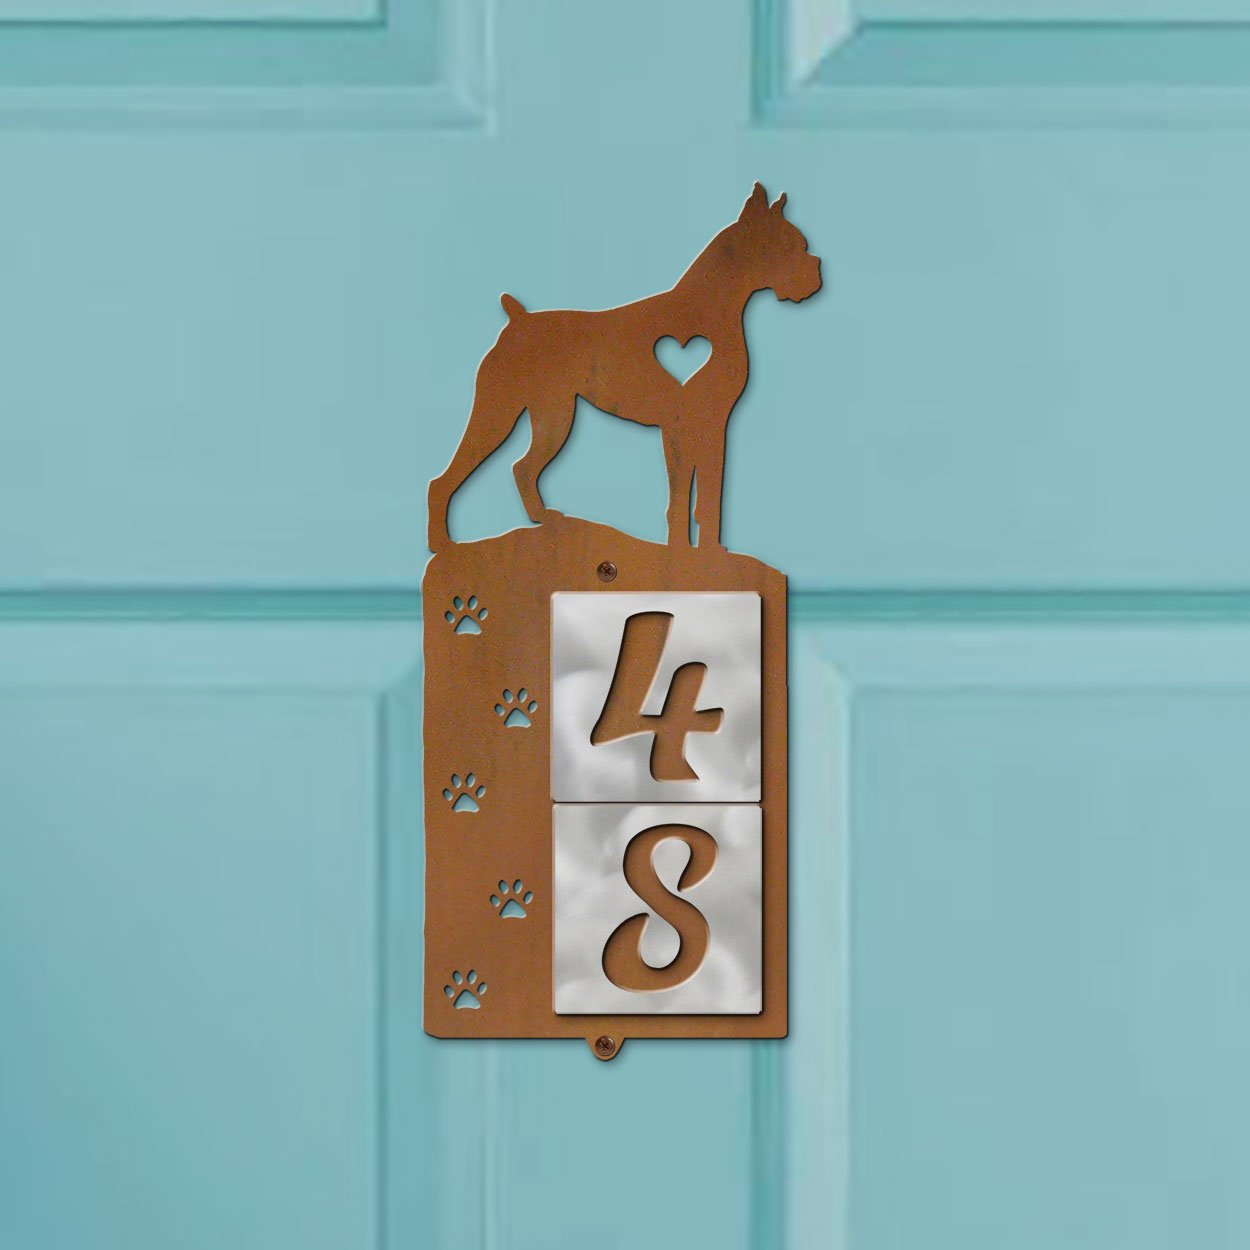 606162 - Boxer Nose Prints 2-Digit Vertical Tile Apartment Numbers